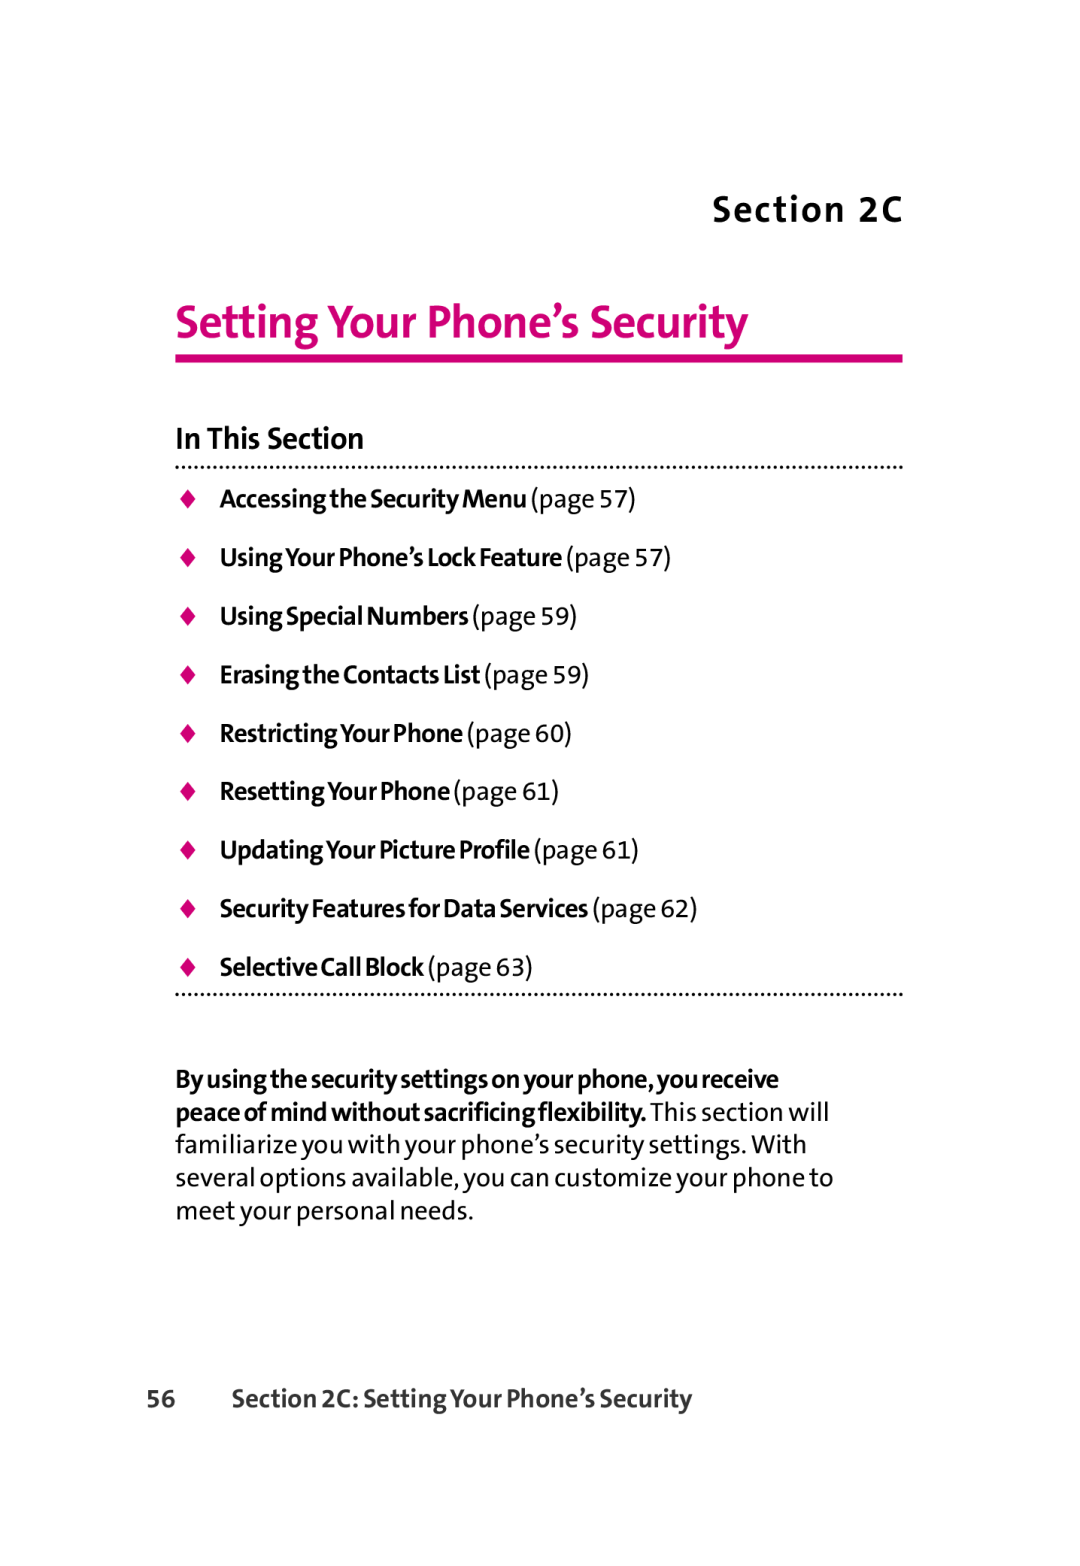 LG Electronics 350 manual Setting Your Phone’s Security, C, AccessingtheSecurityMenupage UsingYourPhone’sLockFeaturepage 